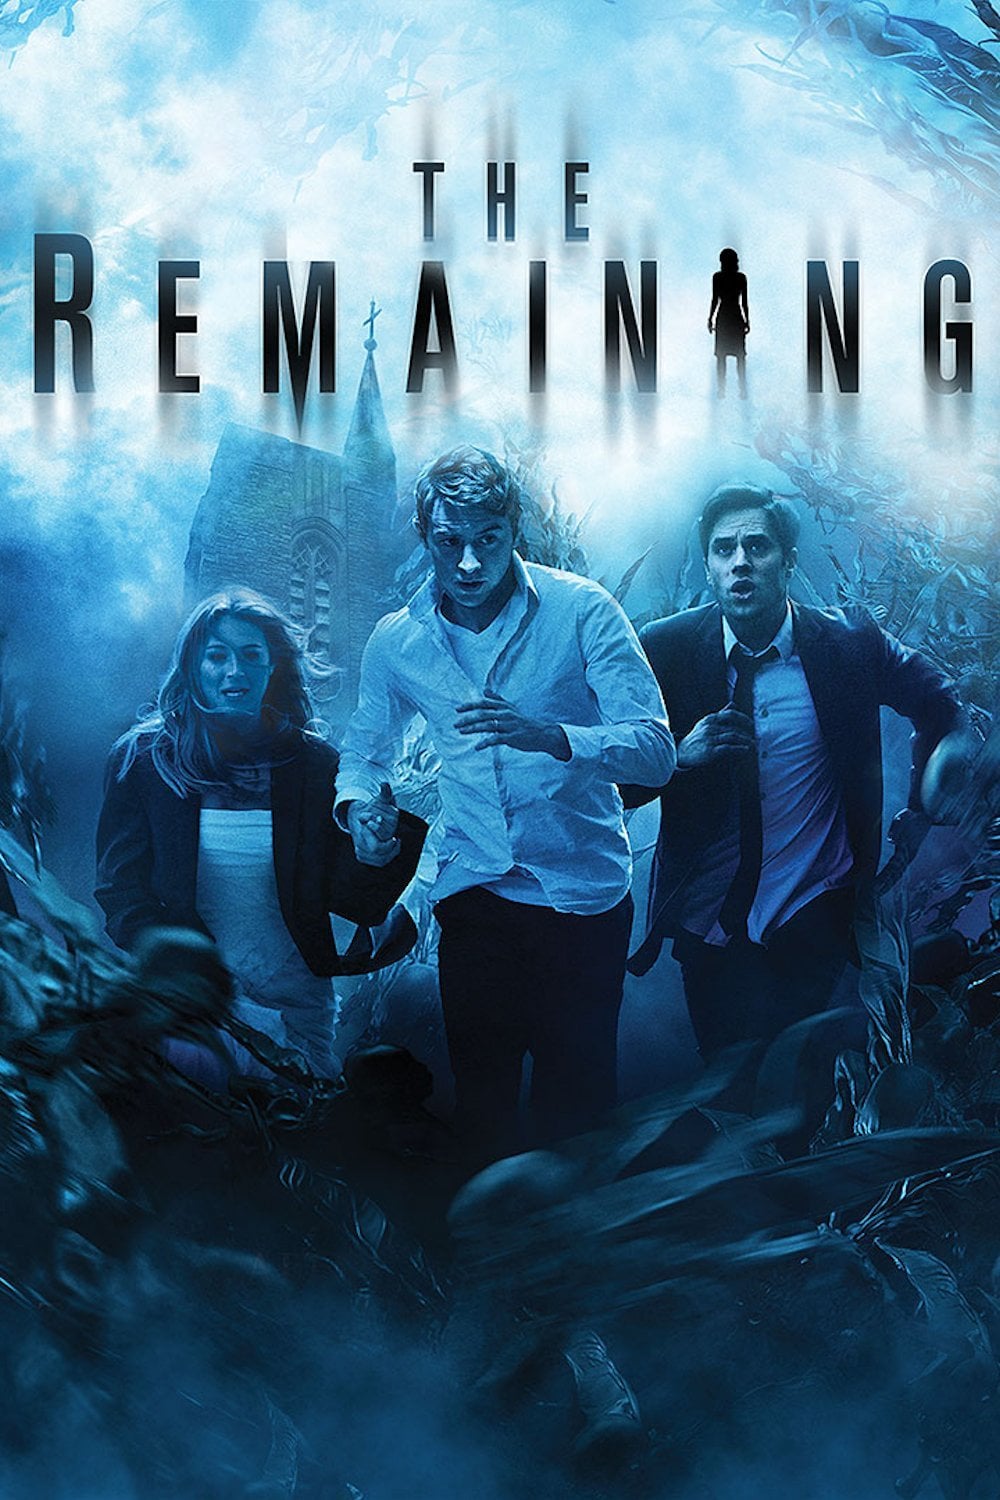 Plakat von "The Remaining"